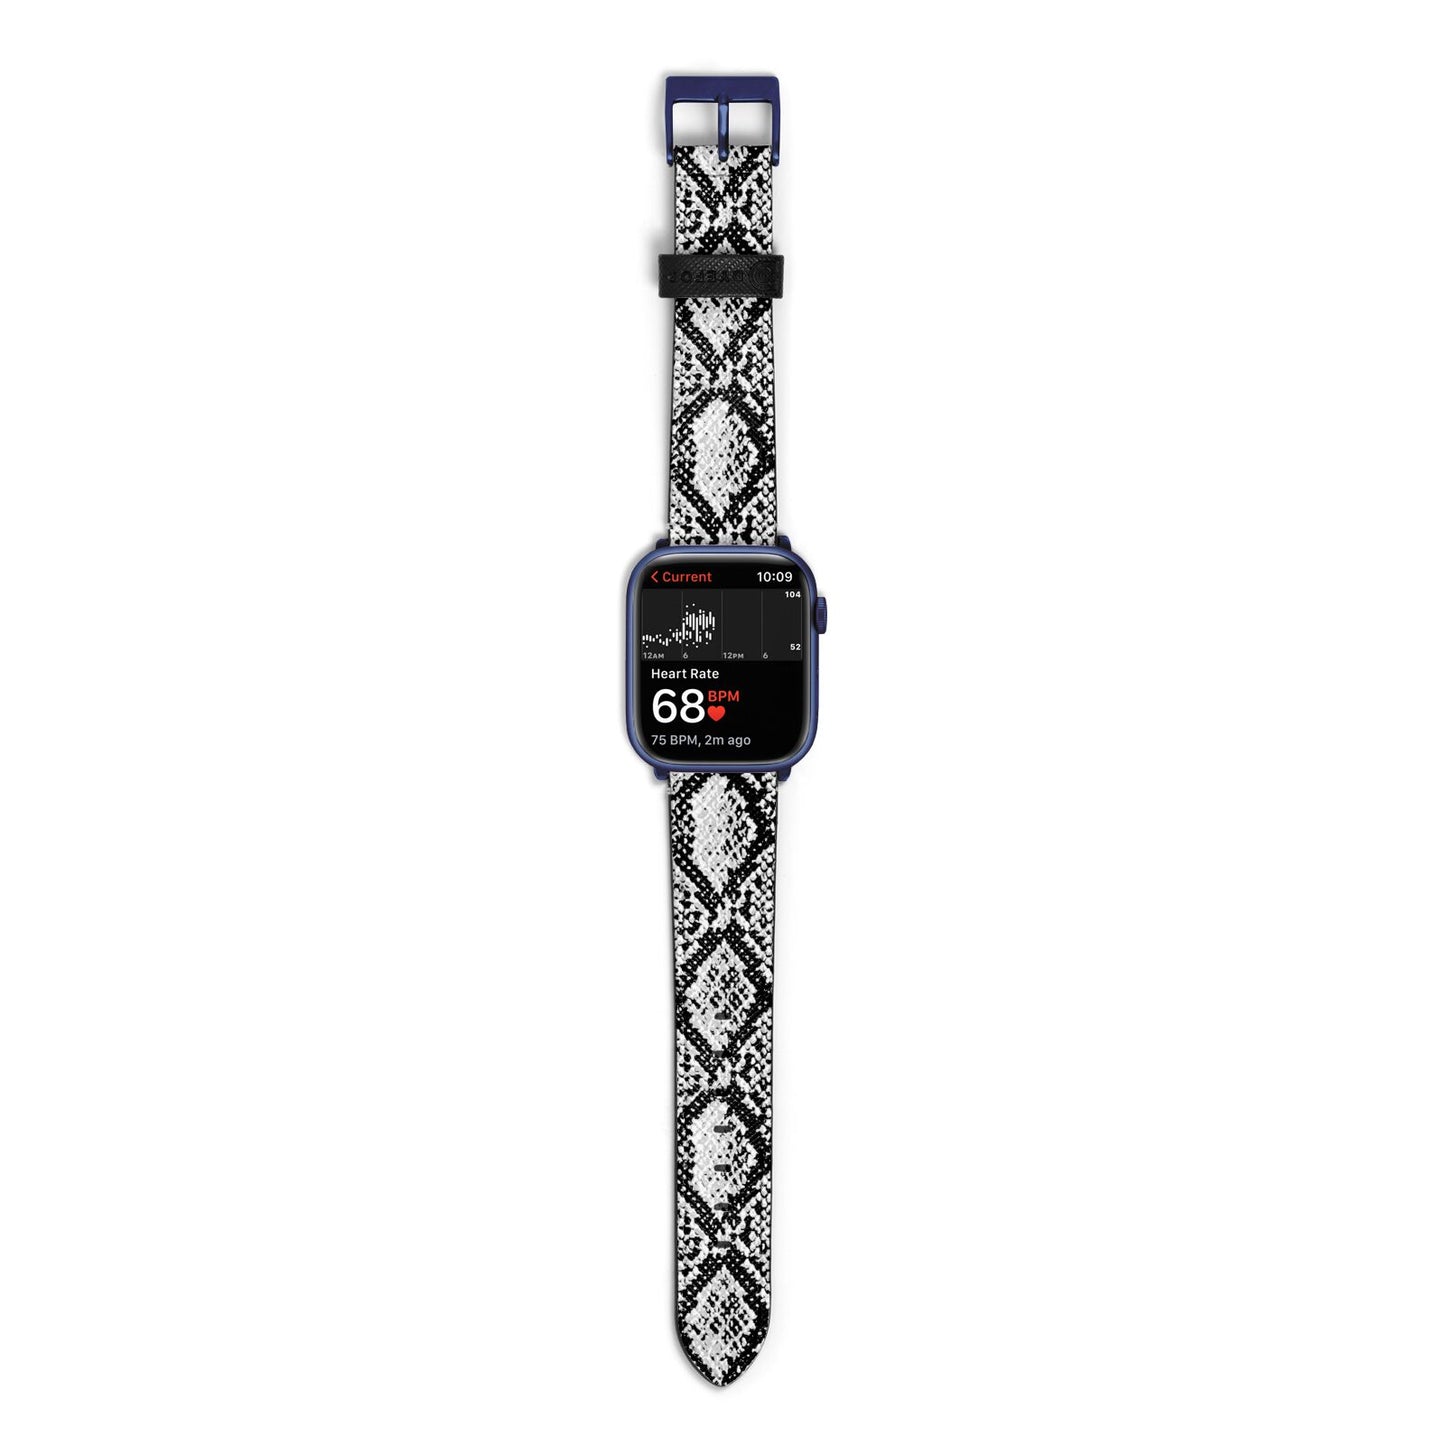 Black Snakeskin Apple Watch Strap Size 38mm with Blue Hardware